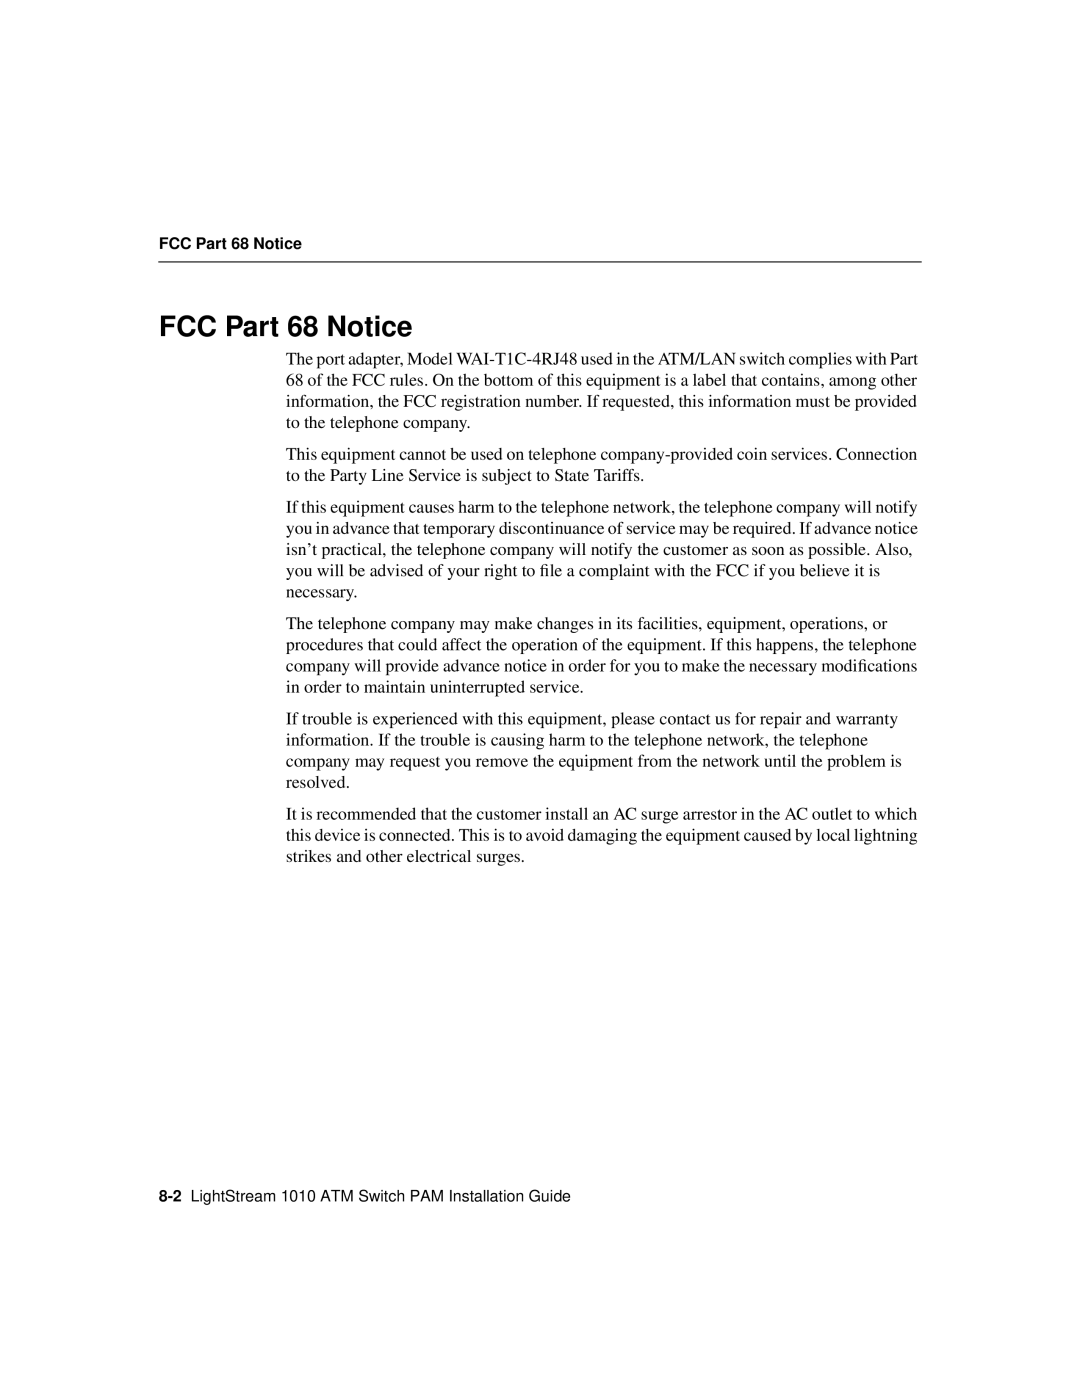 Cisco Systems 1010 manual FCC Part 68 Notice 